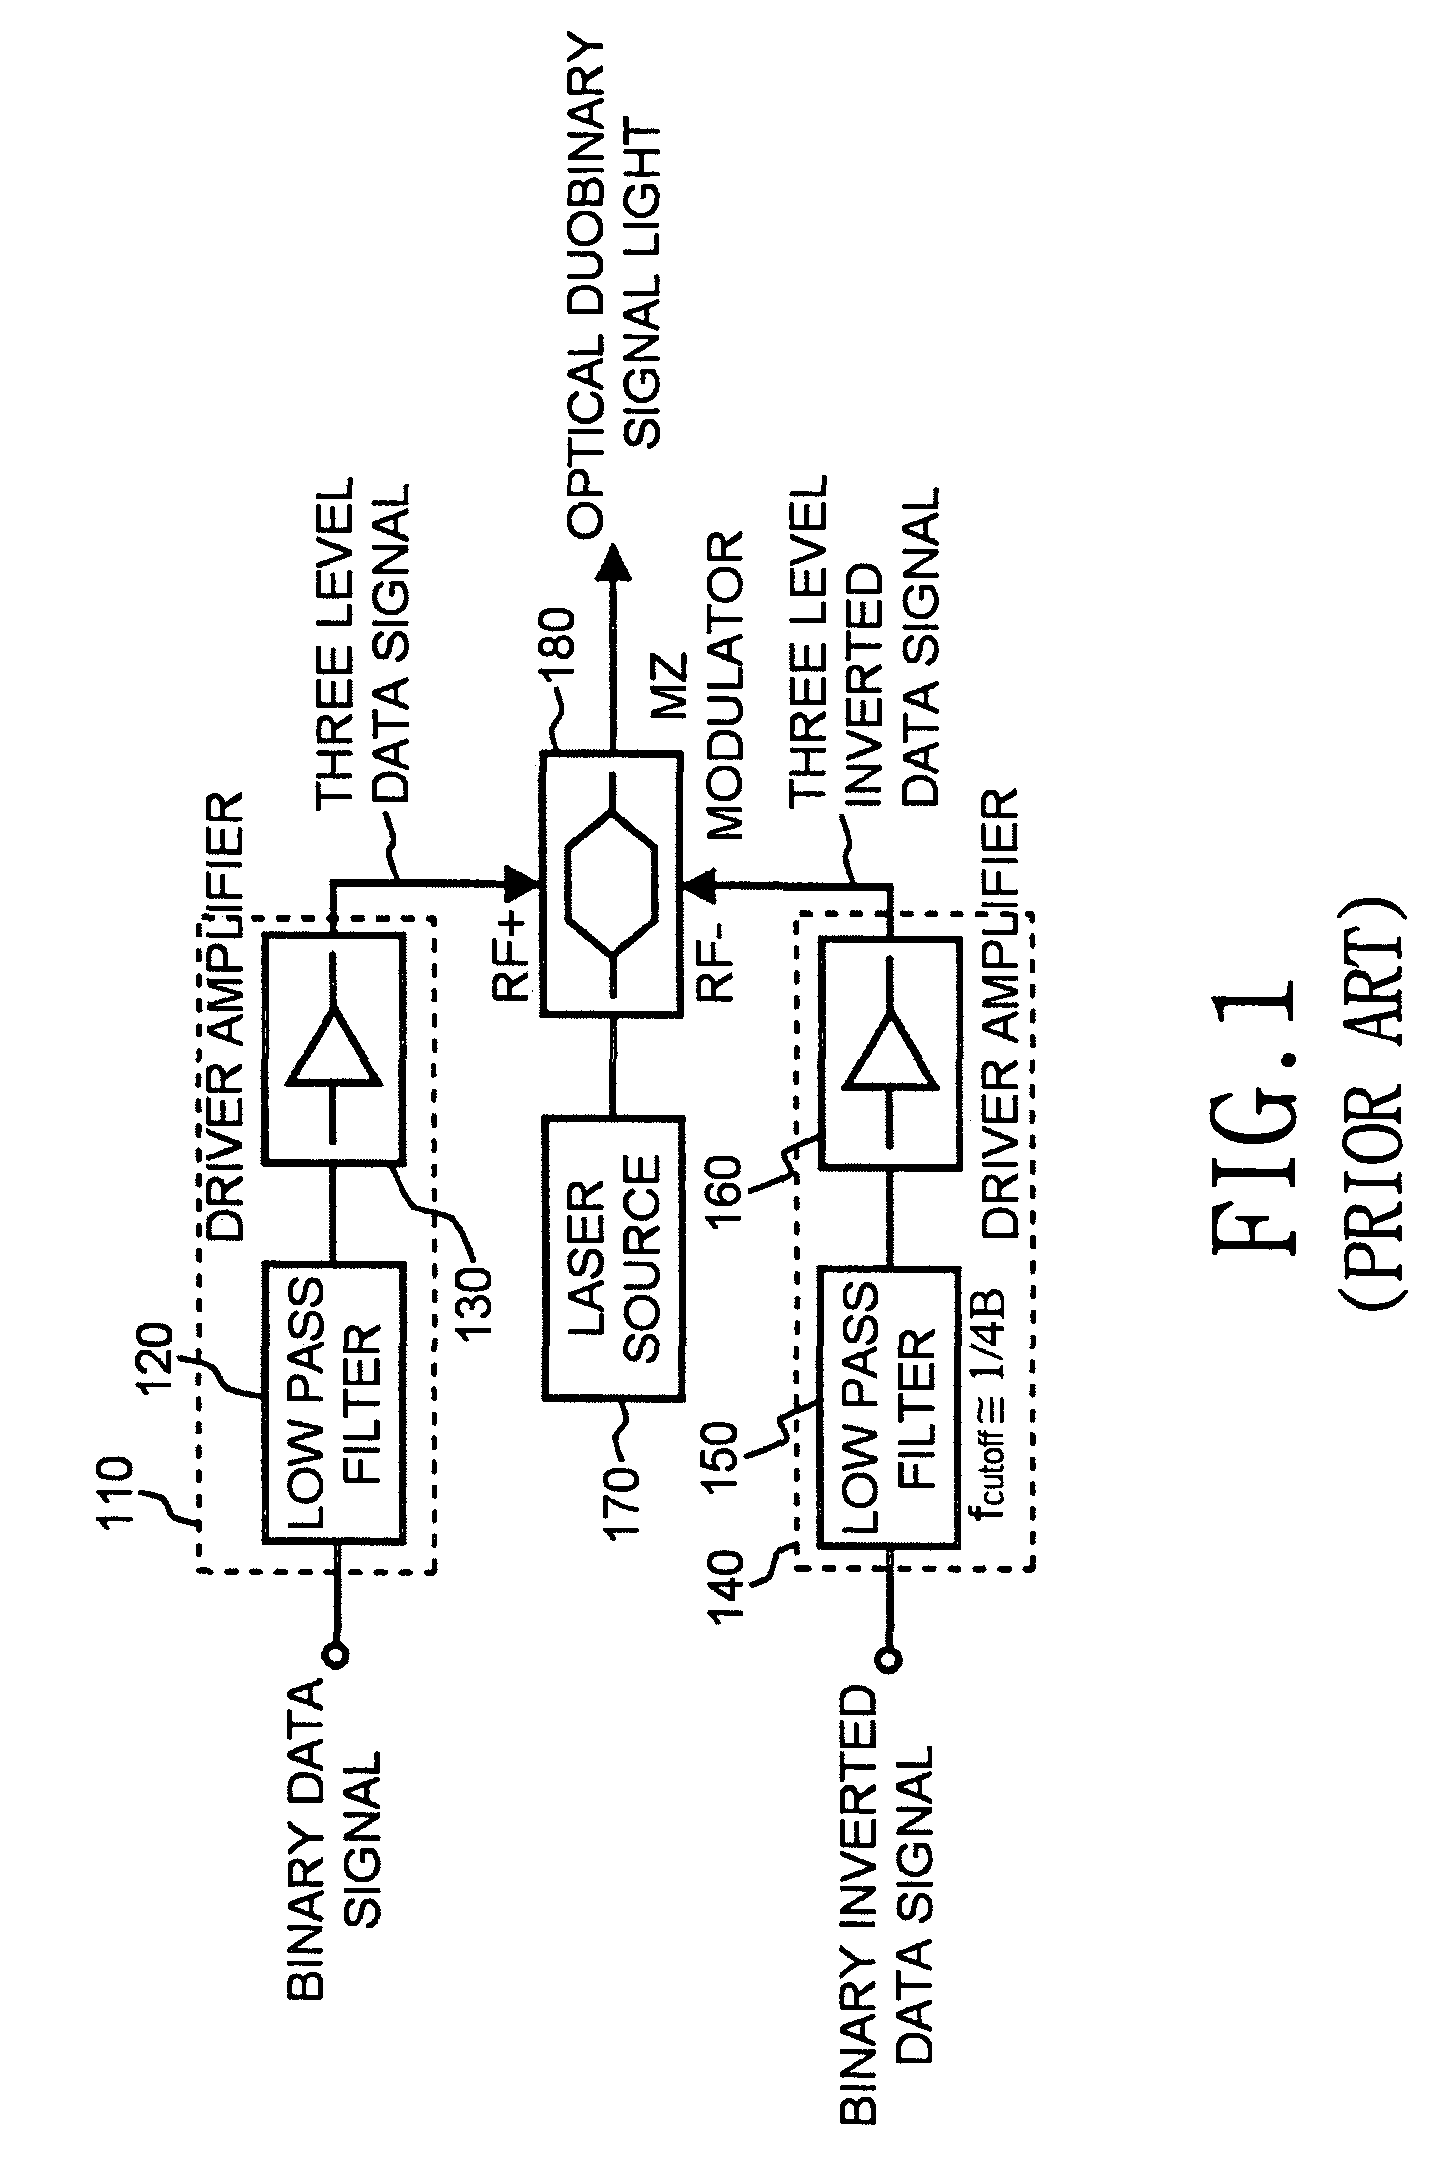 Duobinary optical transmitter